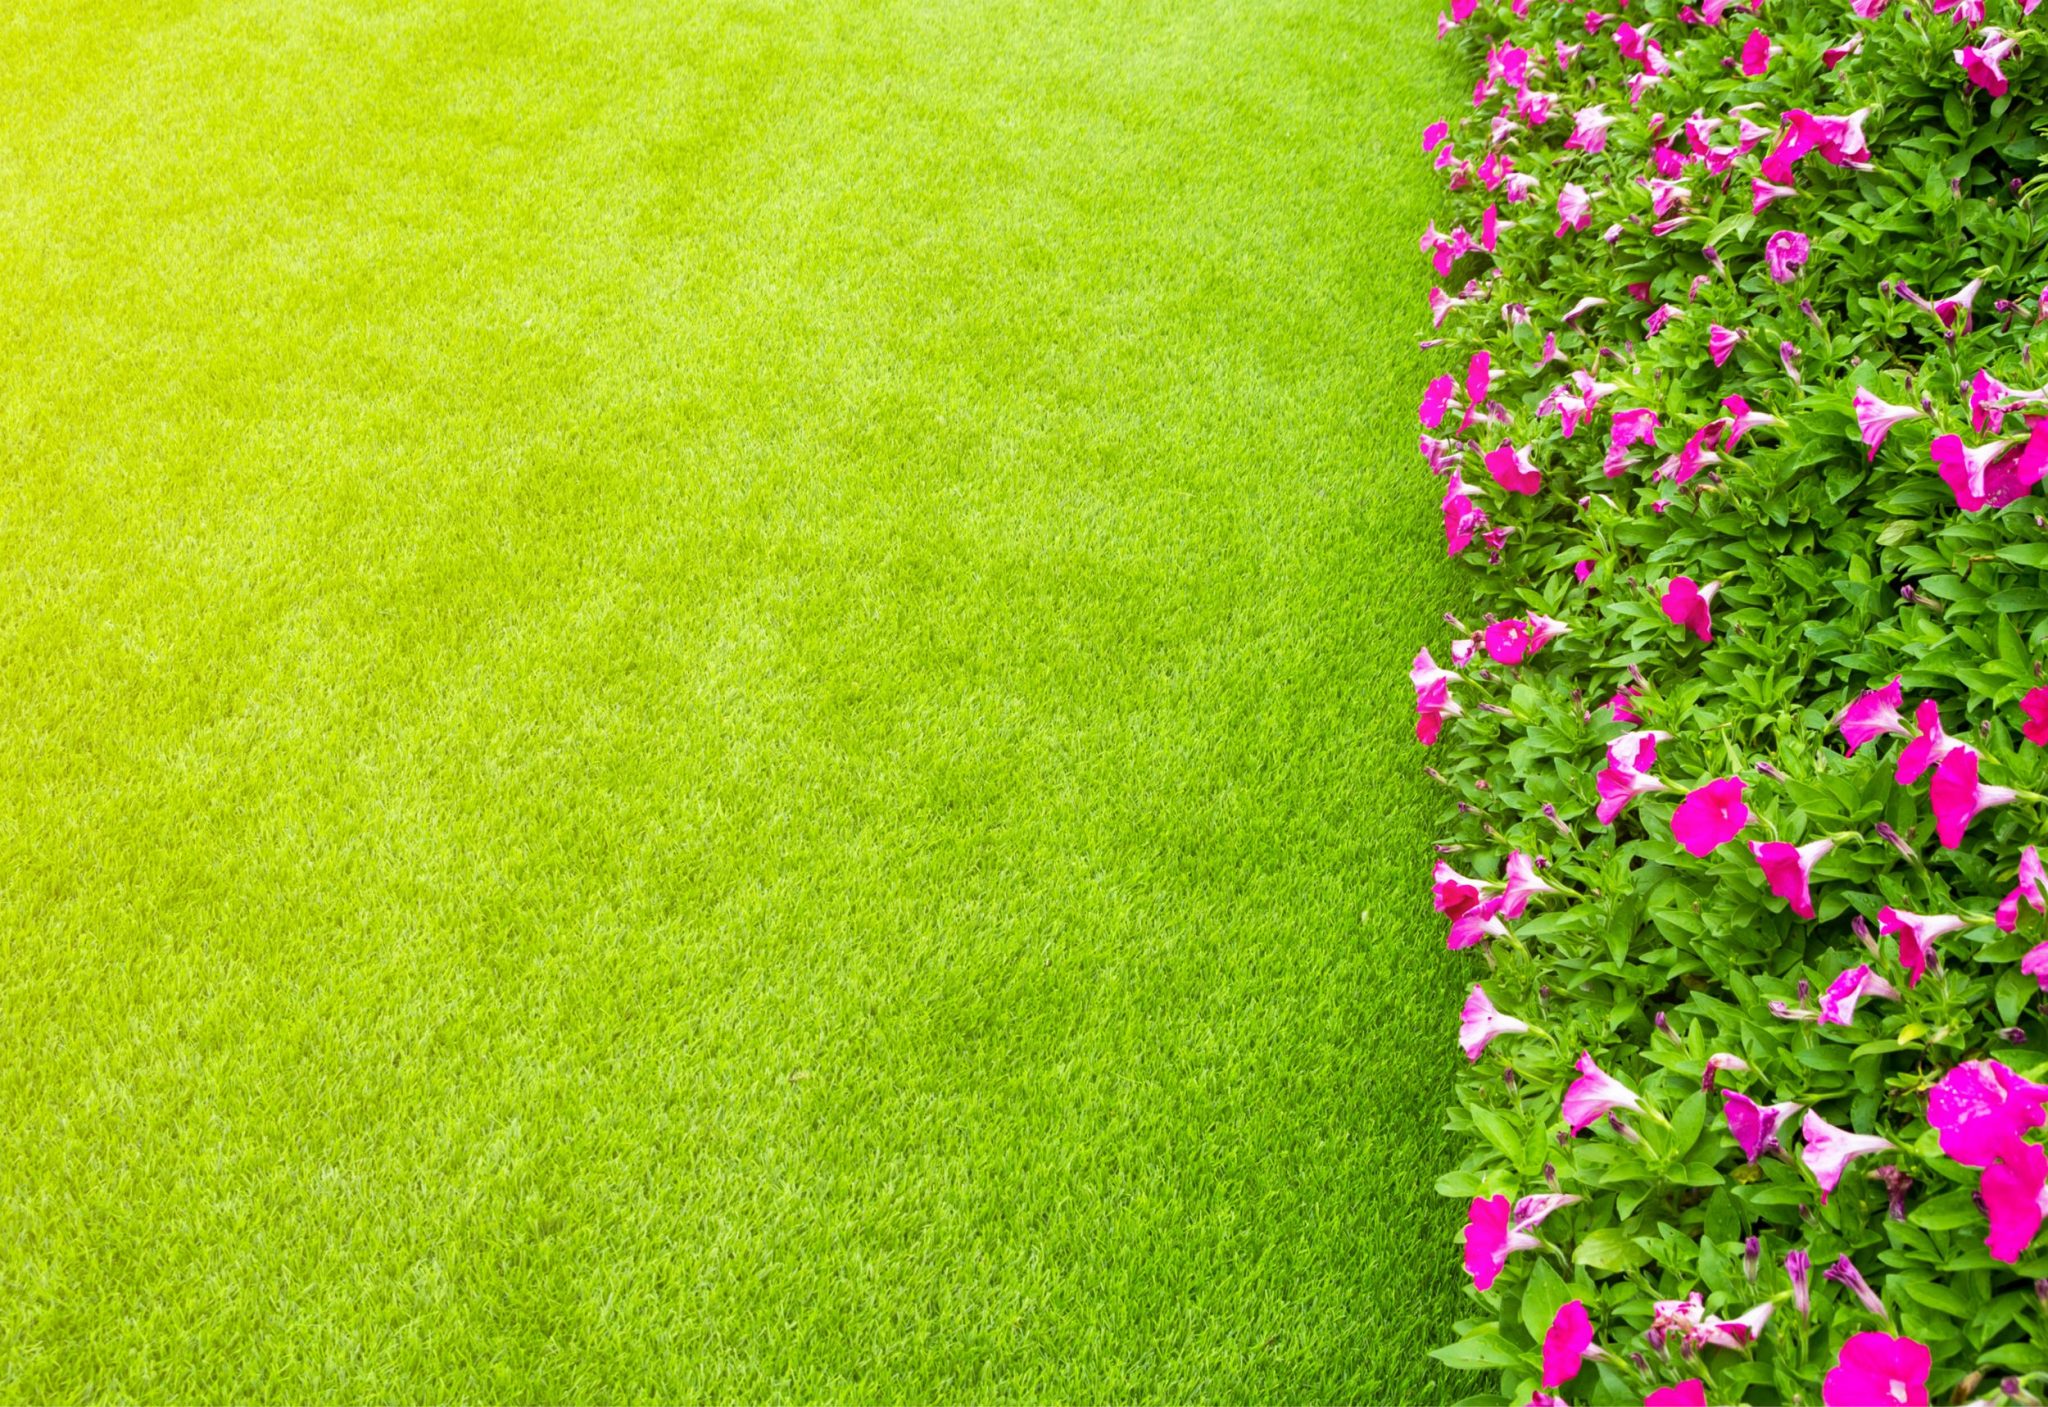 artificial turf living plants